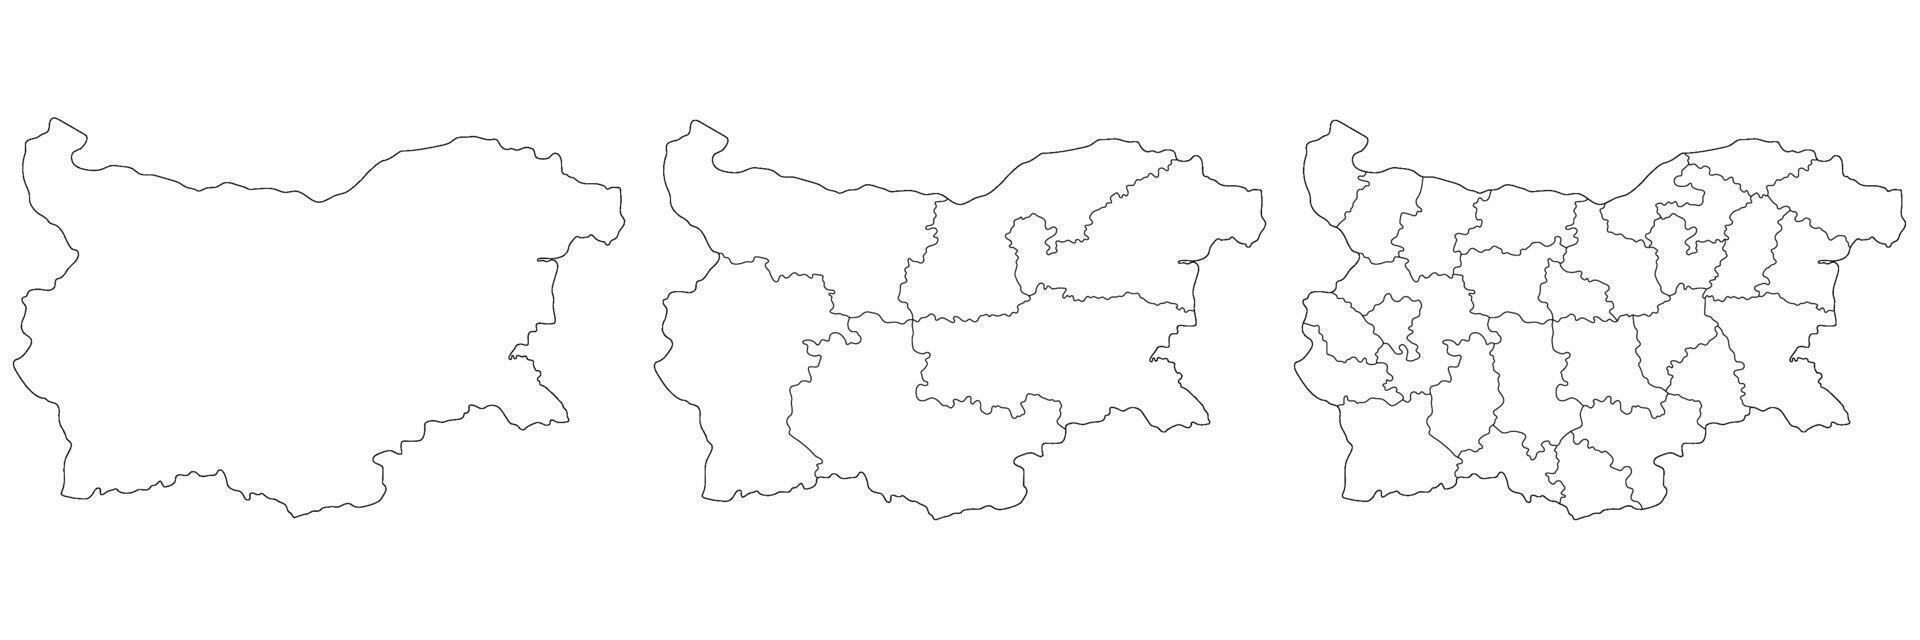 Bulgária mapa. mapa do Bulgária dentro branco conjunto vetor